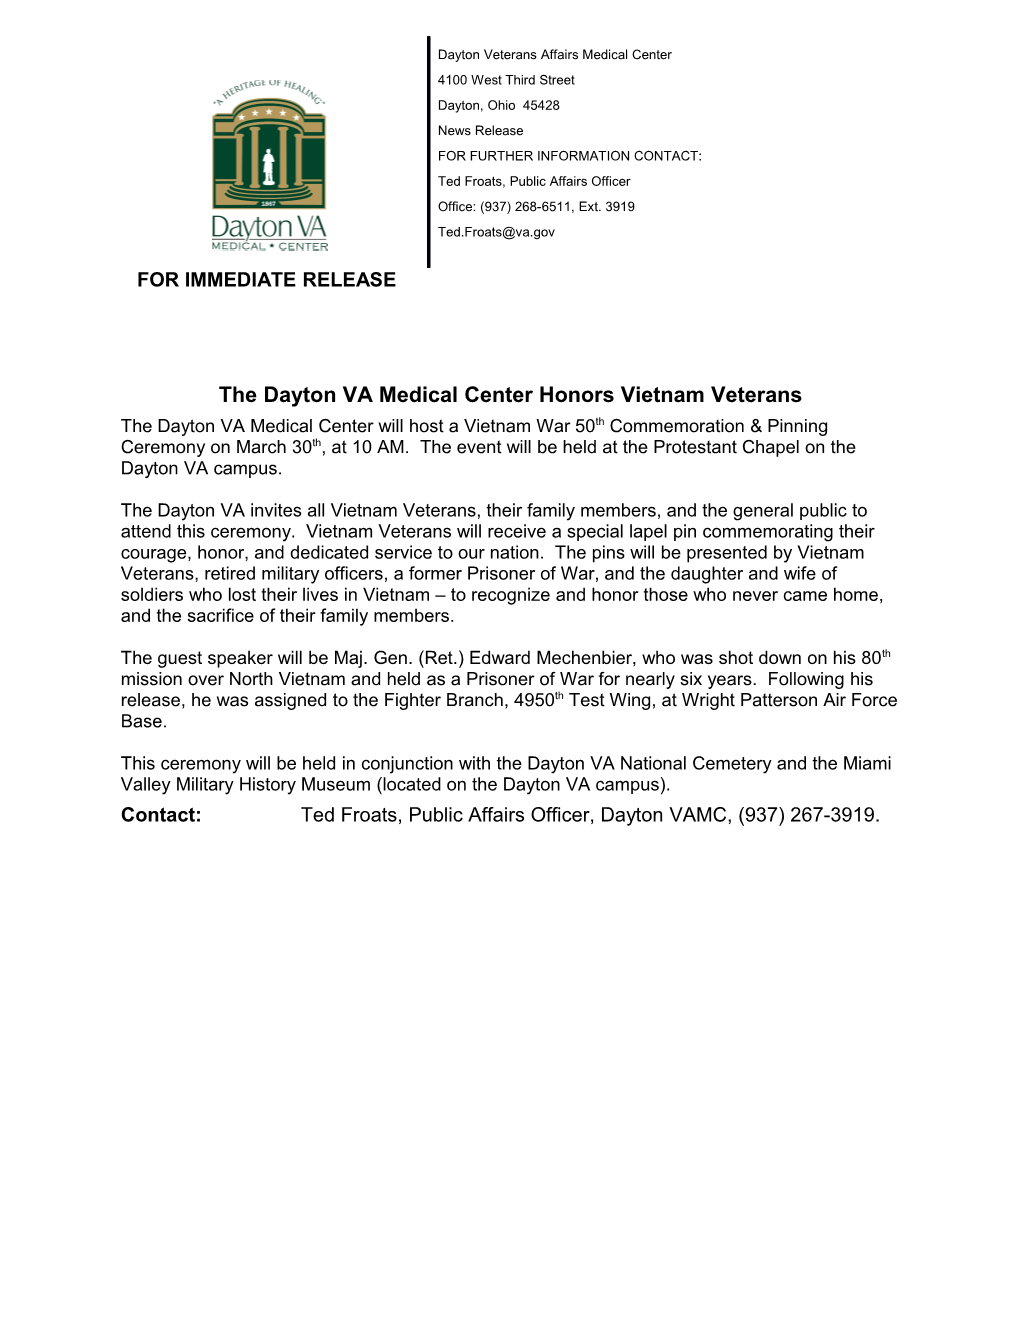 Dayton VAMC Honors Vietnam Veterans